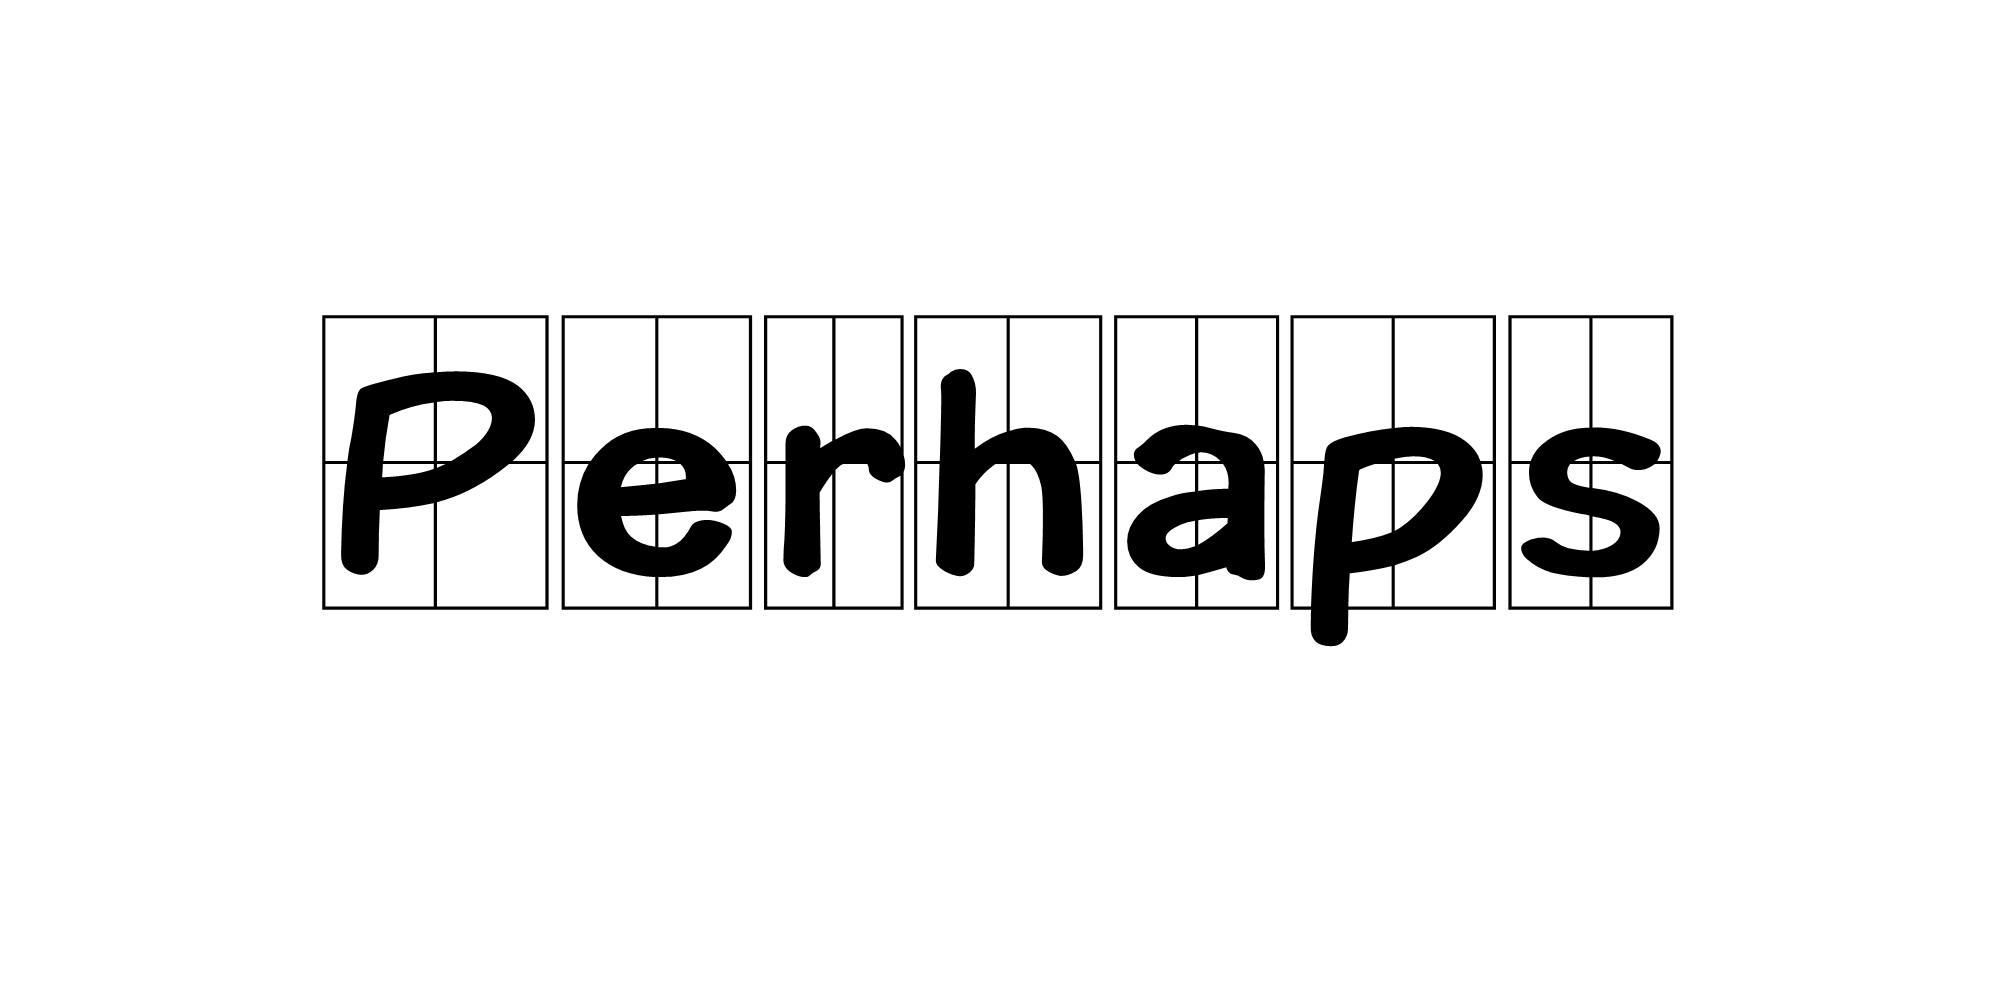 Perhaps(詞典解釋)